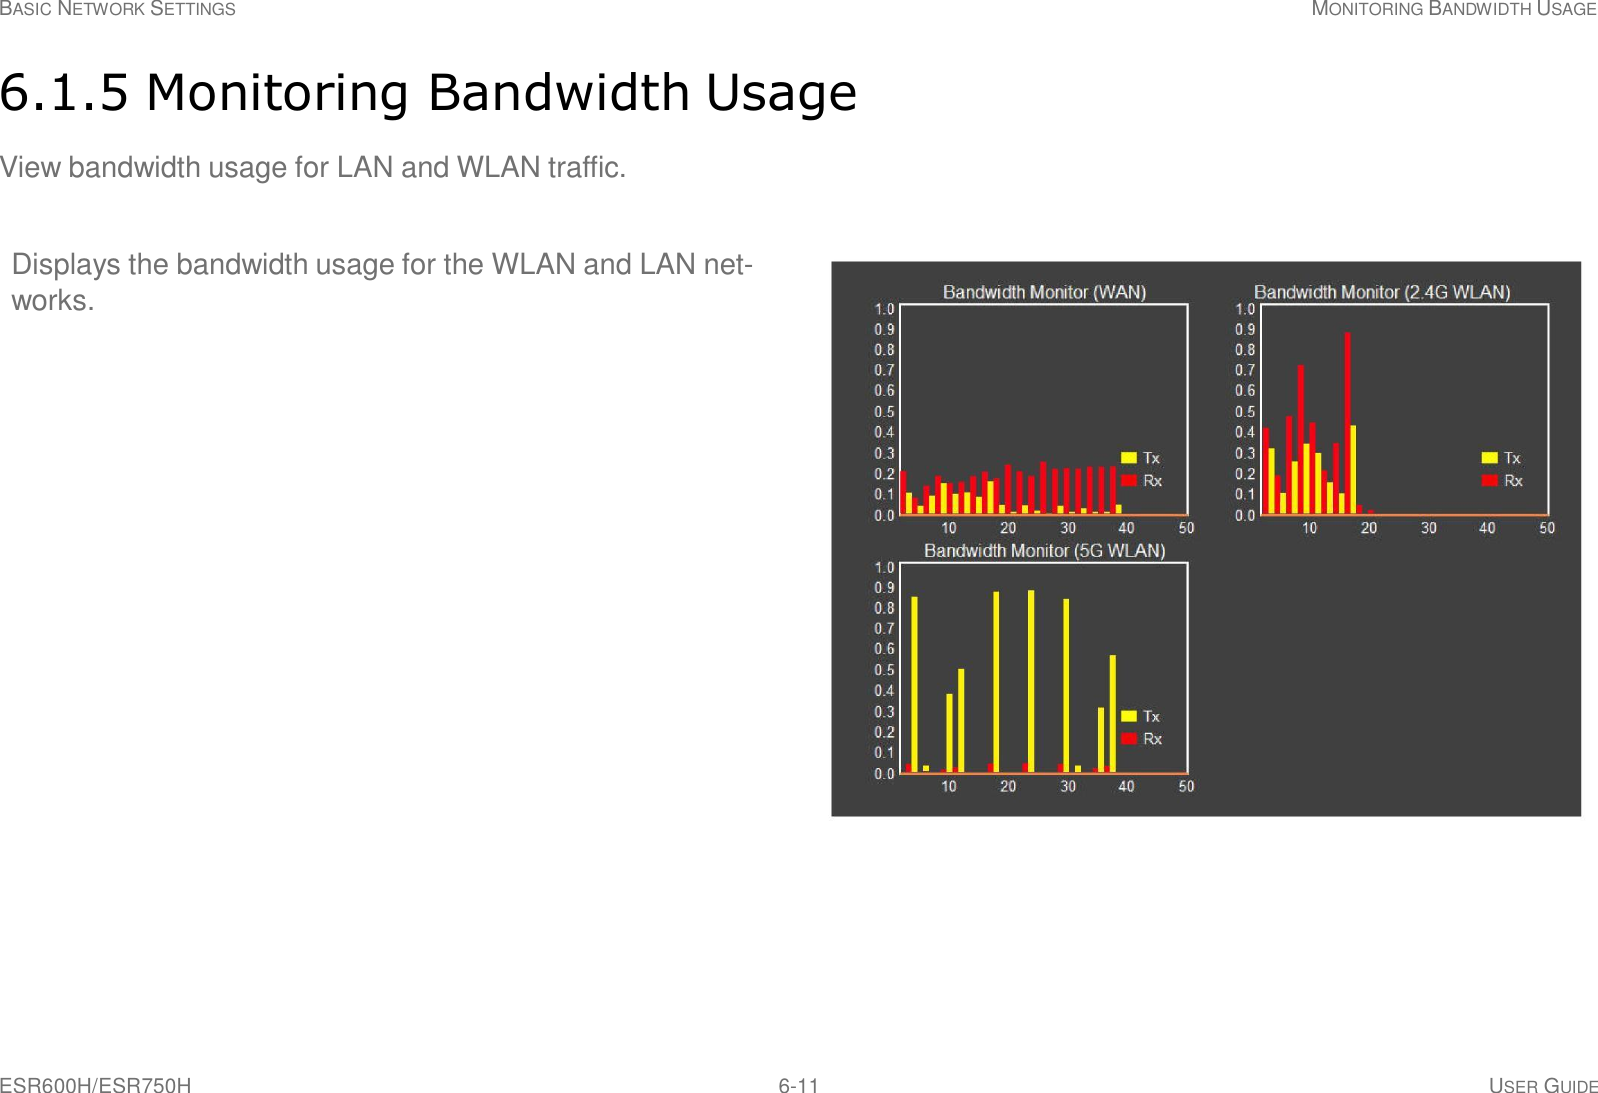 ESR600H/ESR750H 6-11 USER GUIDE BASIC NETWORK SETTINGS MONITORING BANDWIDTH USAGE     6.1.5 Monitoring Bandwidth Usage  View bandwidth usage for LAN and WLAN traffic.    Displays the bandwidth usage for the WLAN and LAN net- works. 